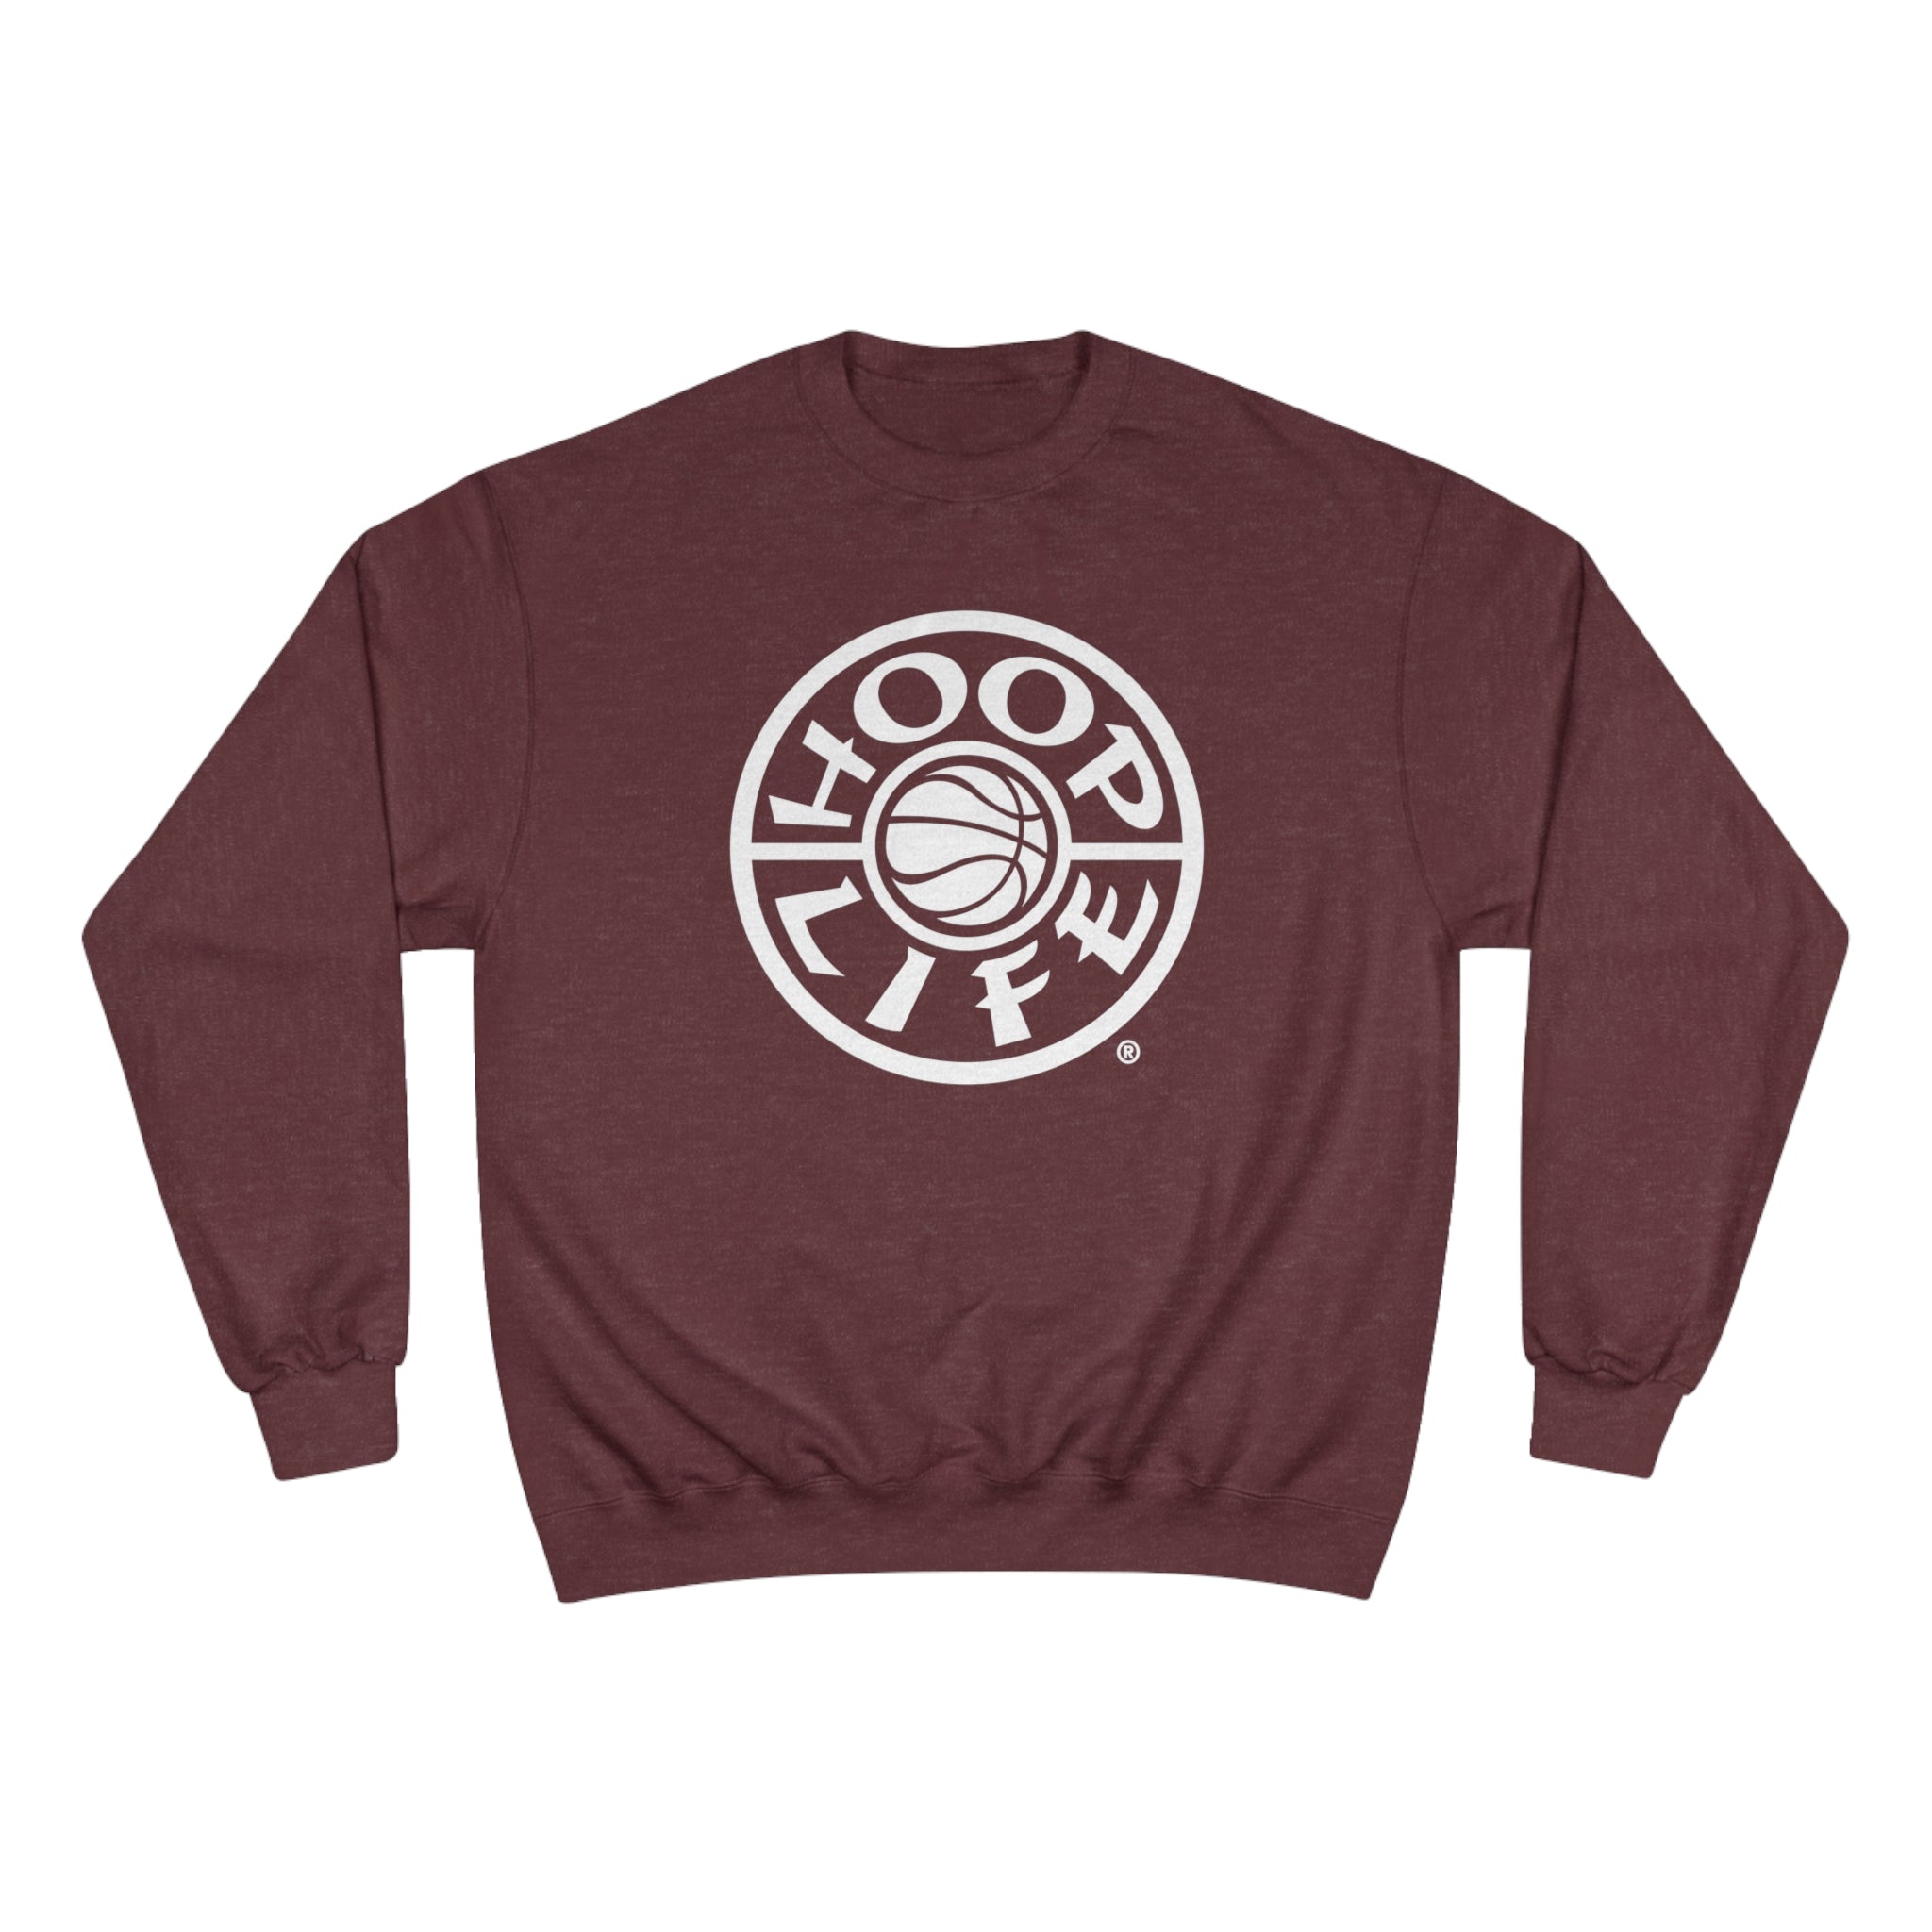 Hooplife® Classic Logo Sweatshirt